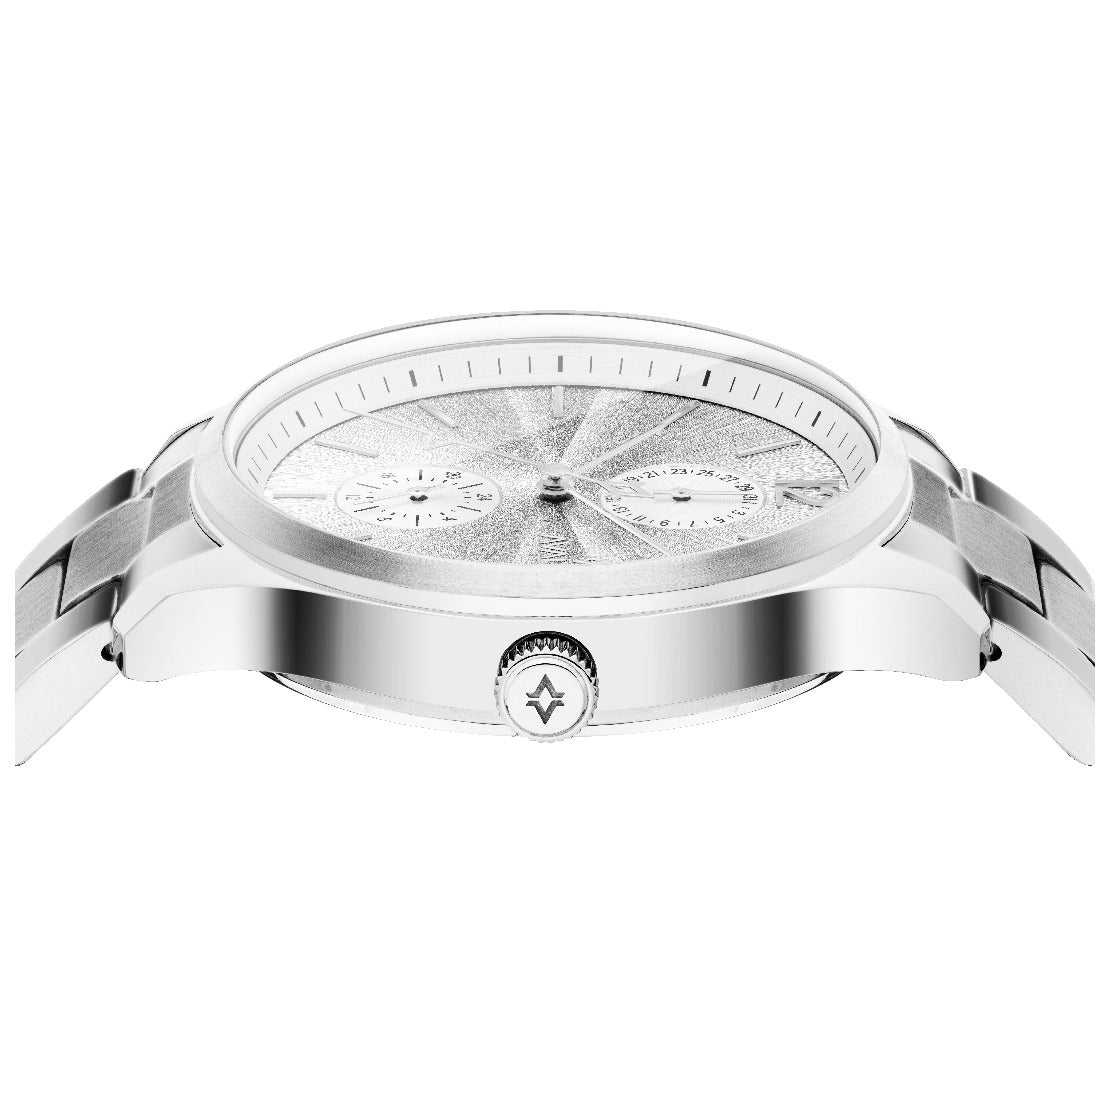 Avalieri Men's Quartz Watch With Silver White Dial - AV-2473B